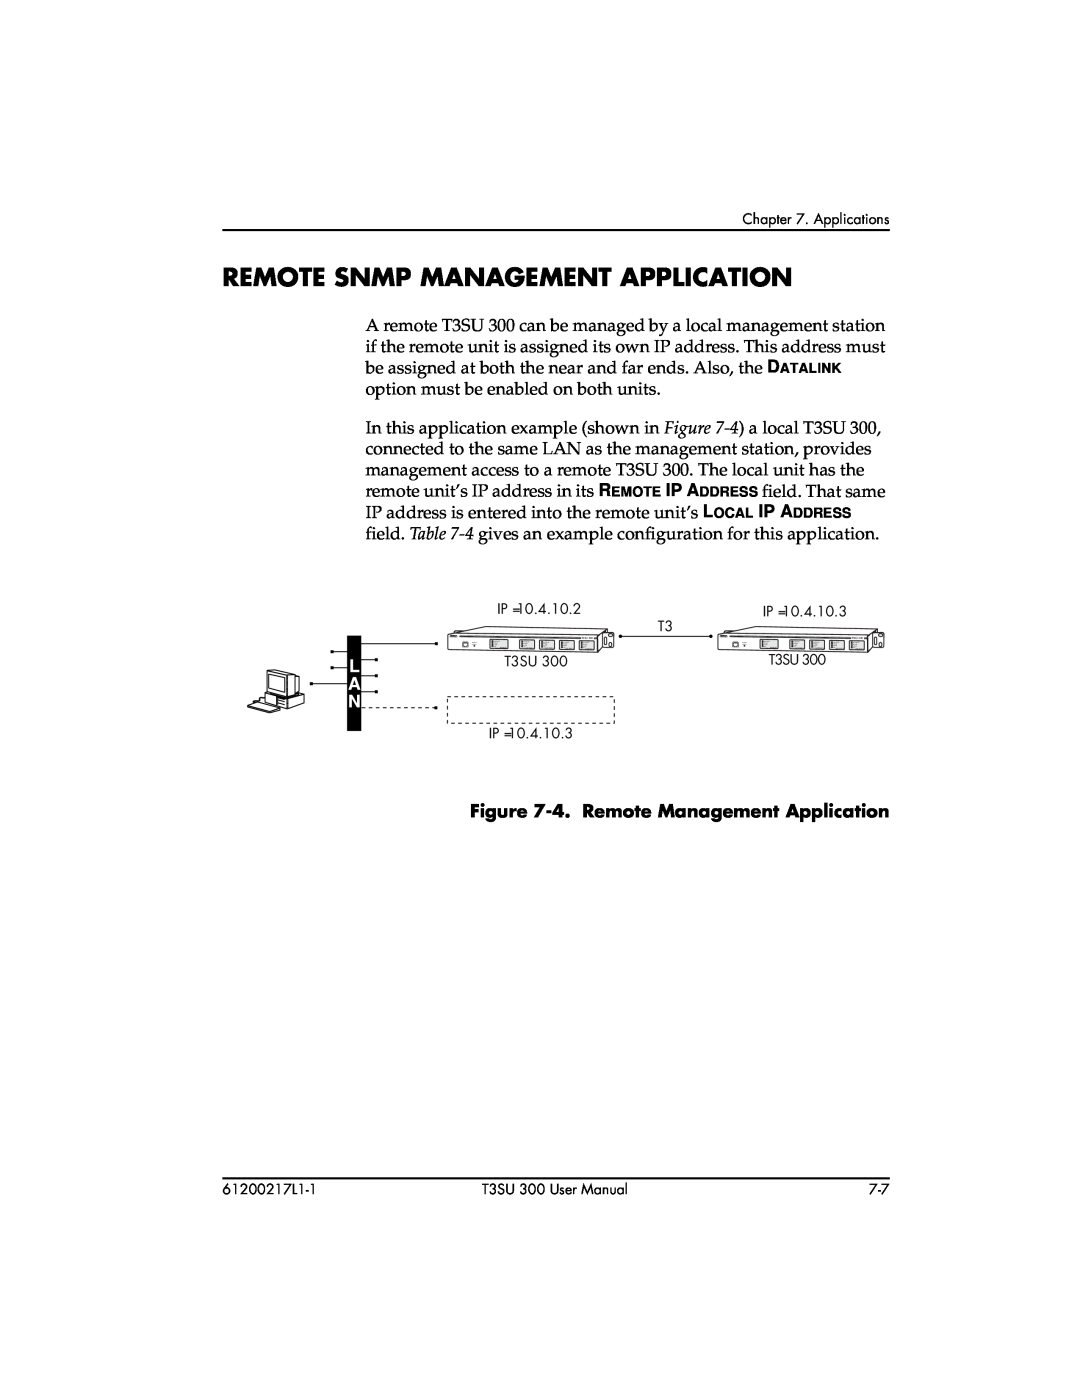 ADTRAN T3SU 300 user manual Remote Snmp Management Application, 4. Remote Management Application 